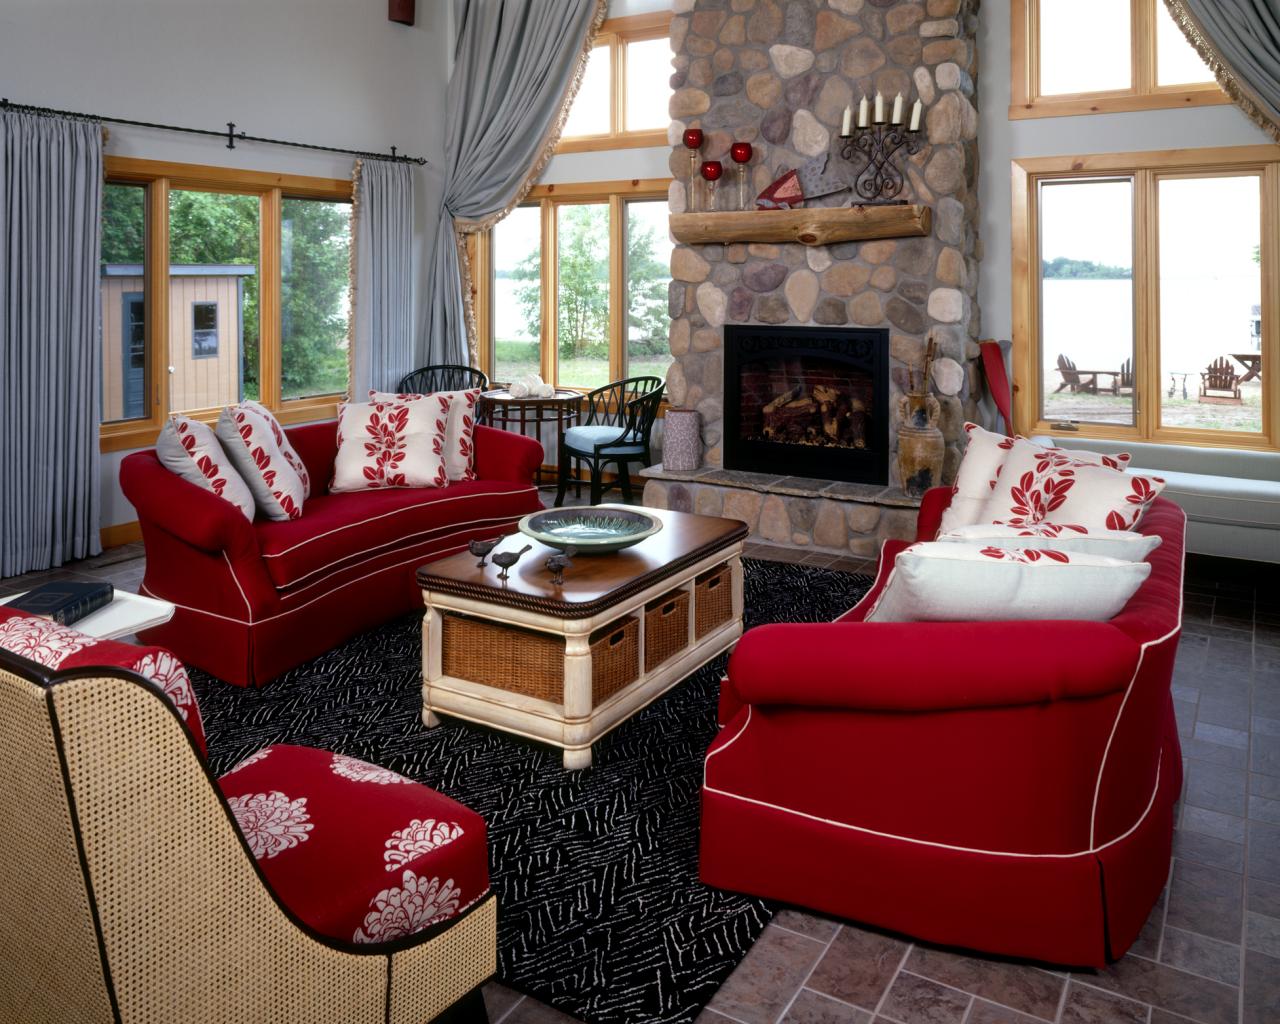 Nice red and gray living room